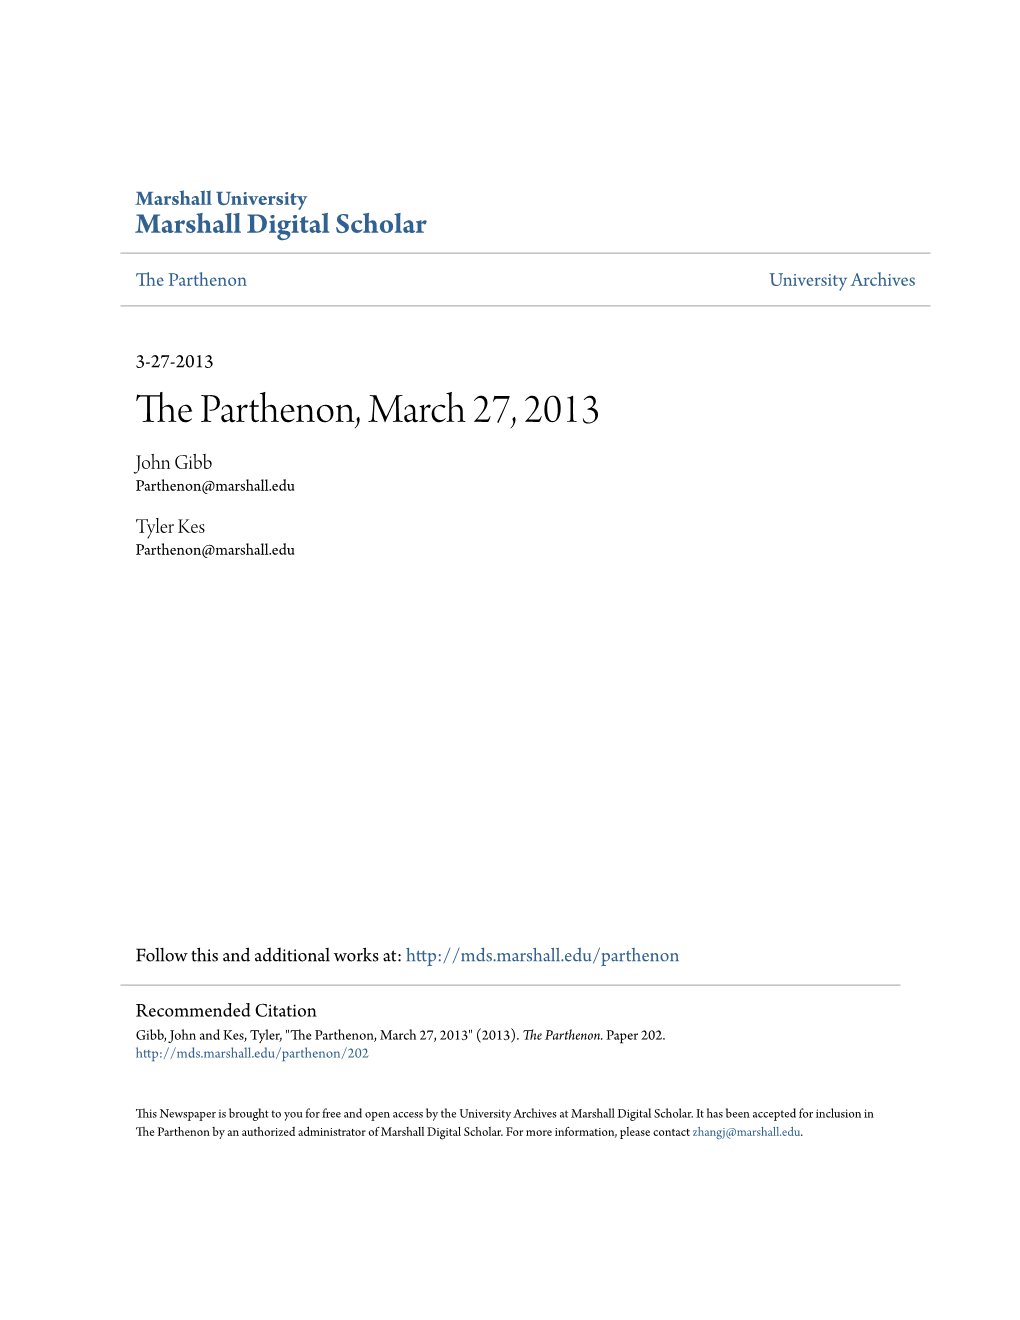 The Parthenon, March 27, 2013